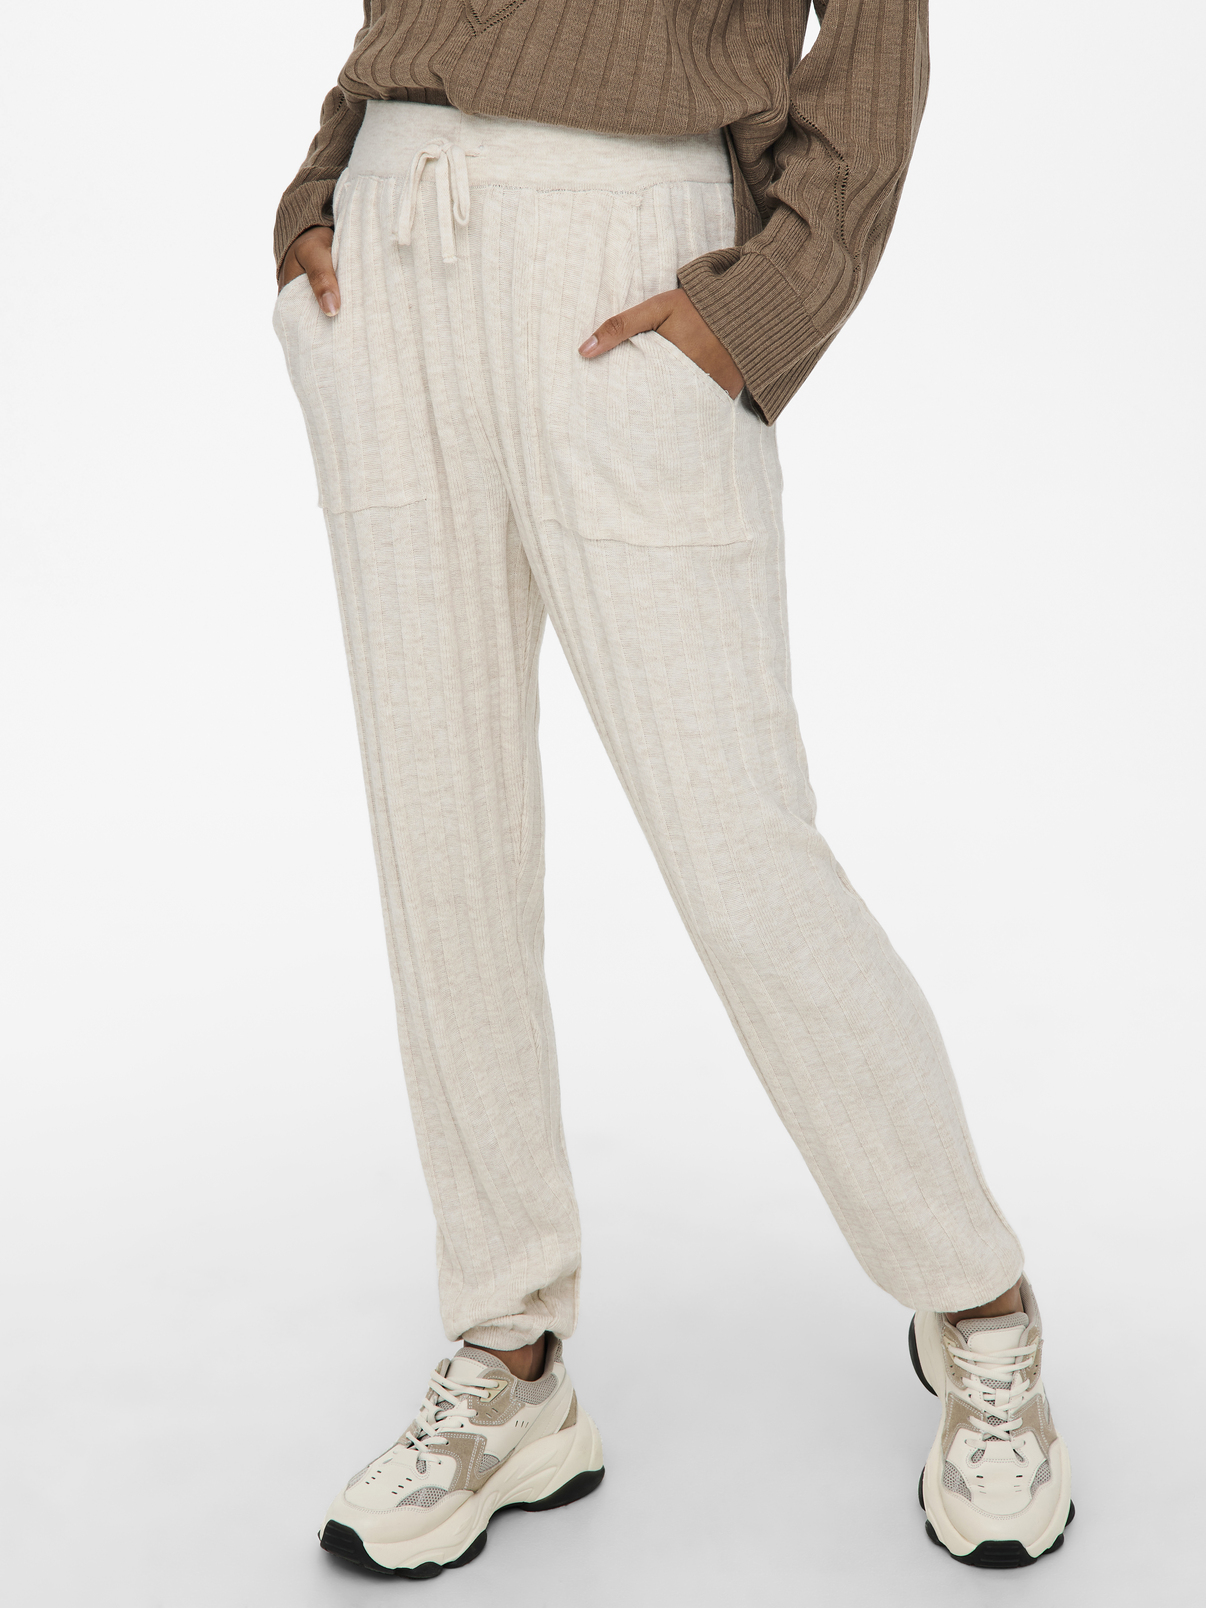 FINAL SALE - Tessa rib-knit pants, PUMICE STONE, large